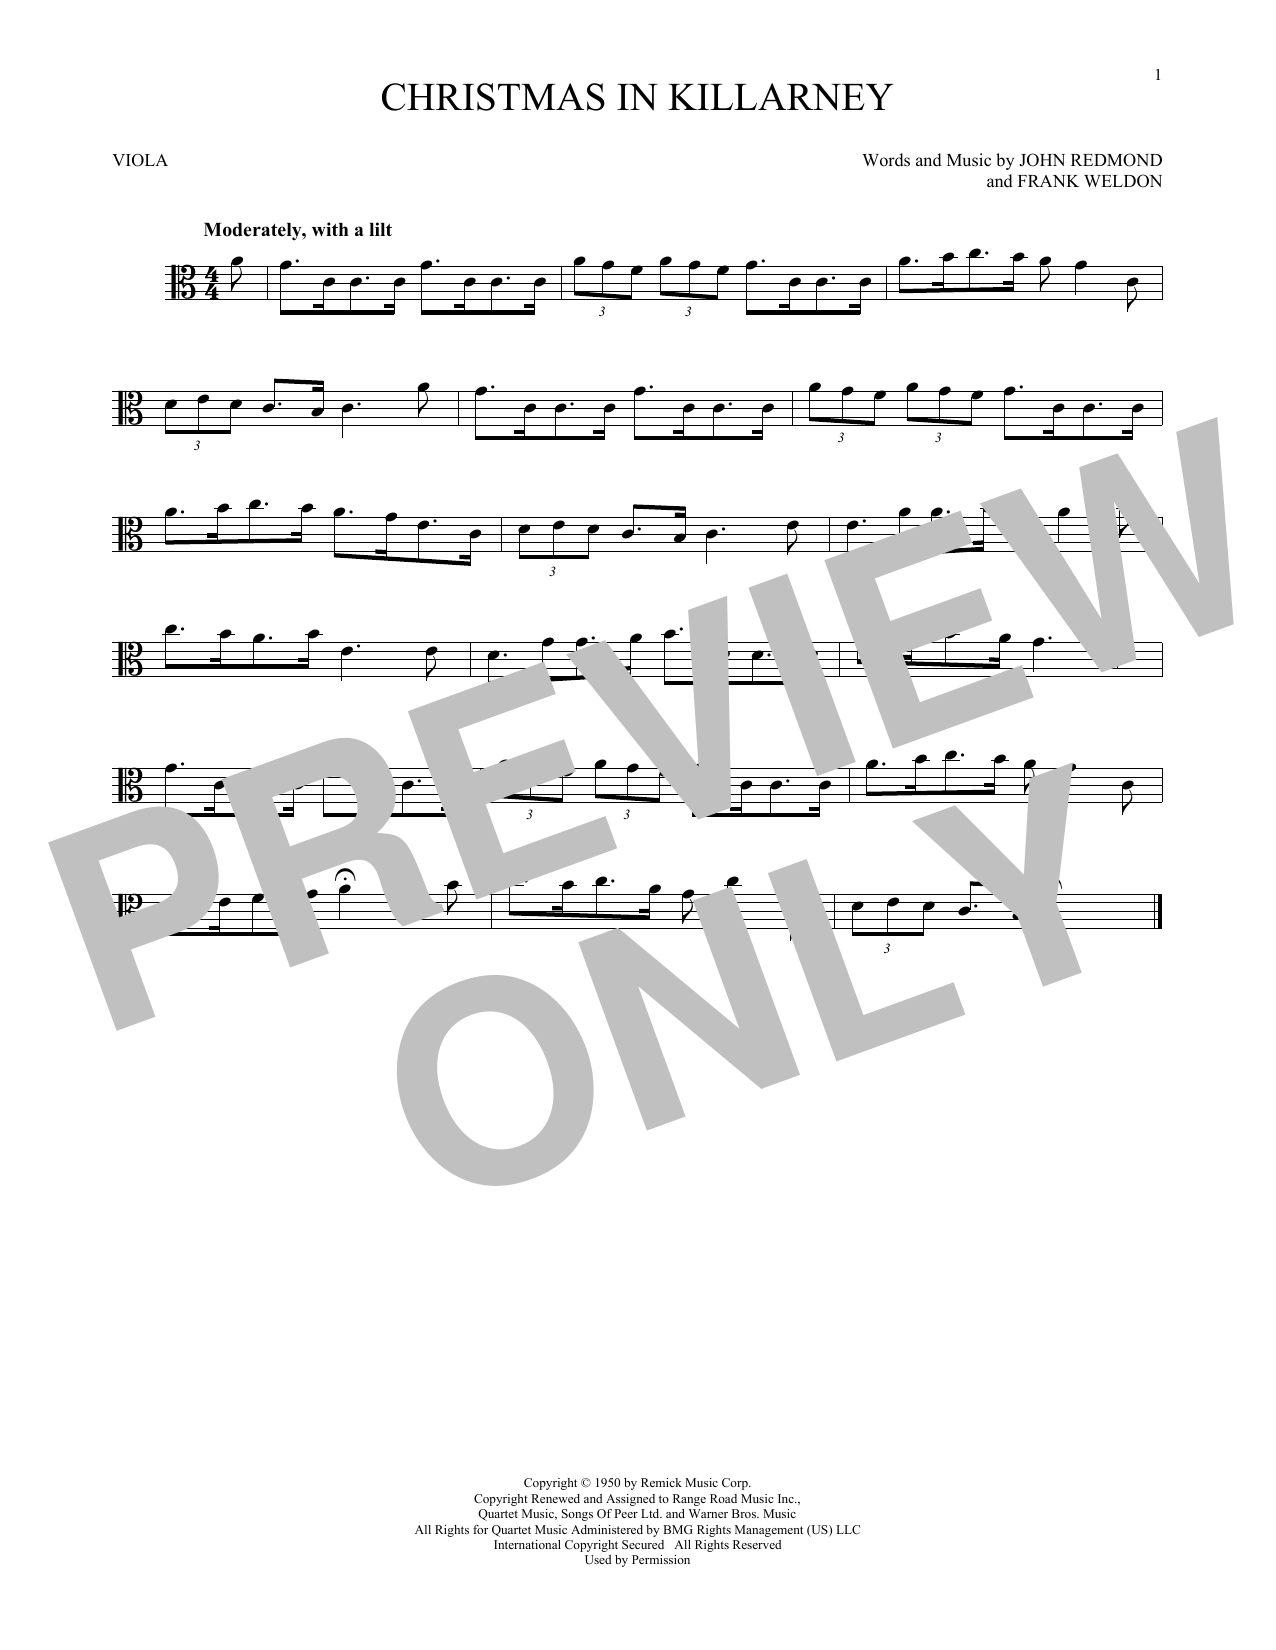 John Redmond & Frank Weldon Christmas In Killarney Sheet Music Notes & Chords for Viola Solo - Download or Print PDF